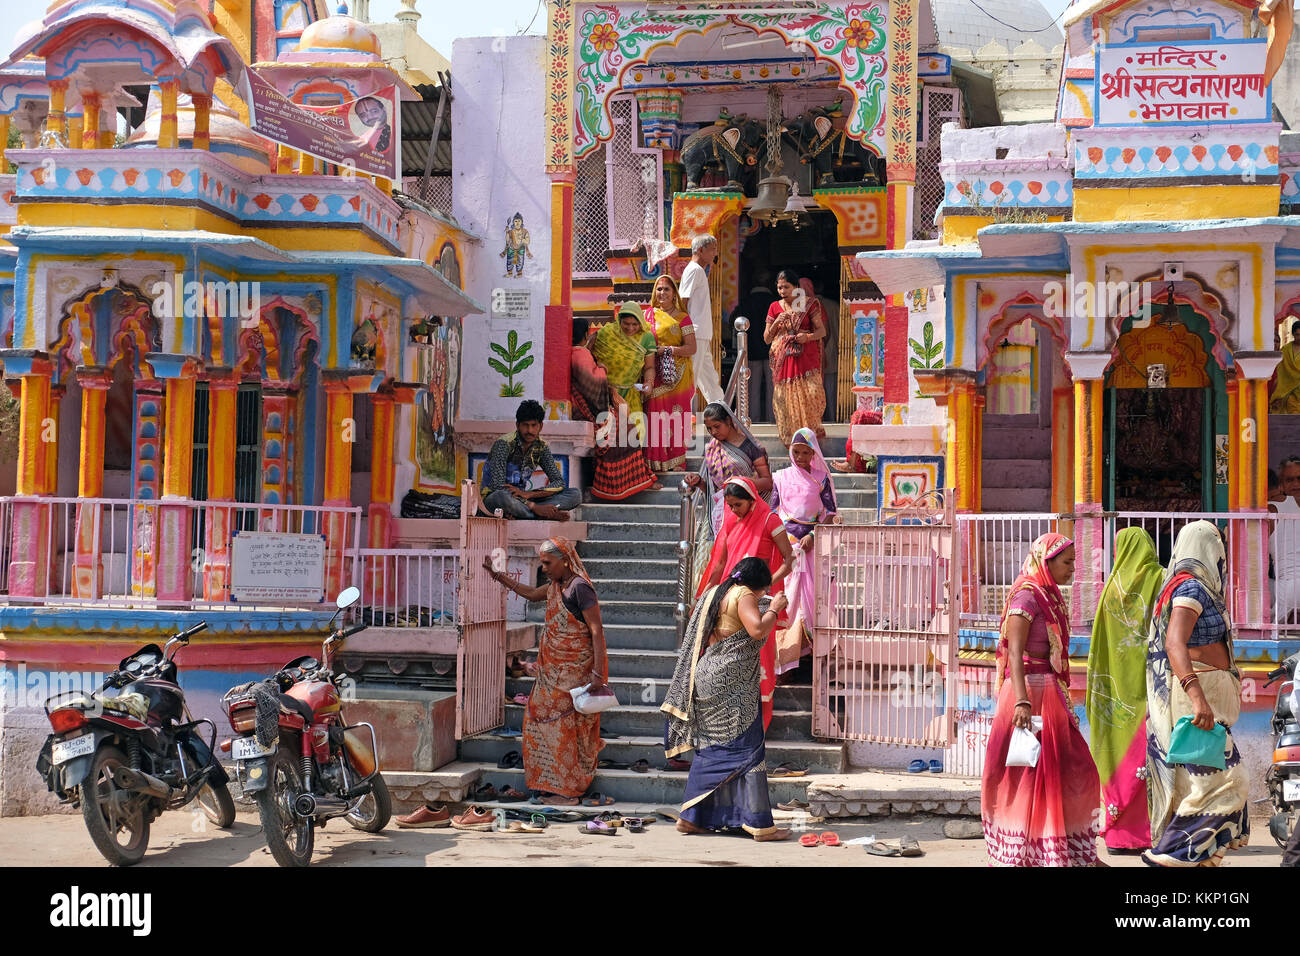 India rajasthan bundi hindu temple hi-res stock photography and images -  Alamy